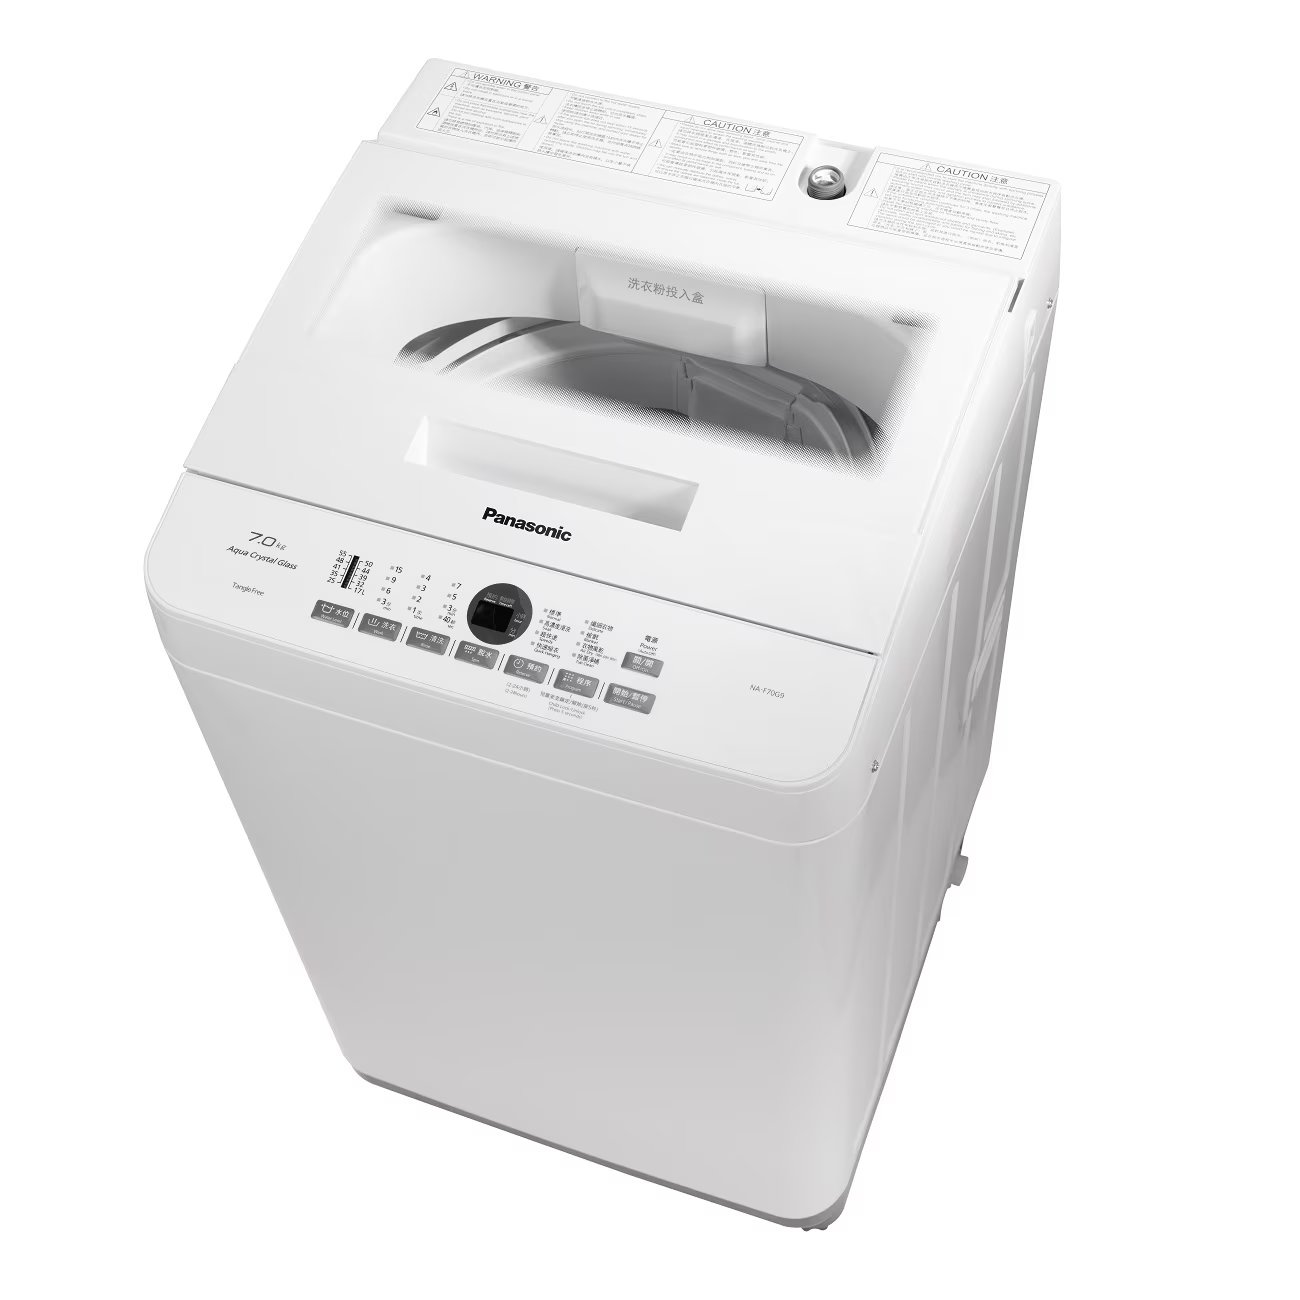 PANASONIC [i]7KG洗衣機 NA-F70G9